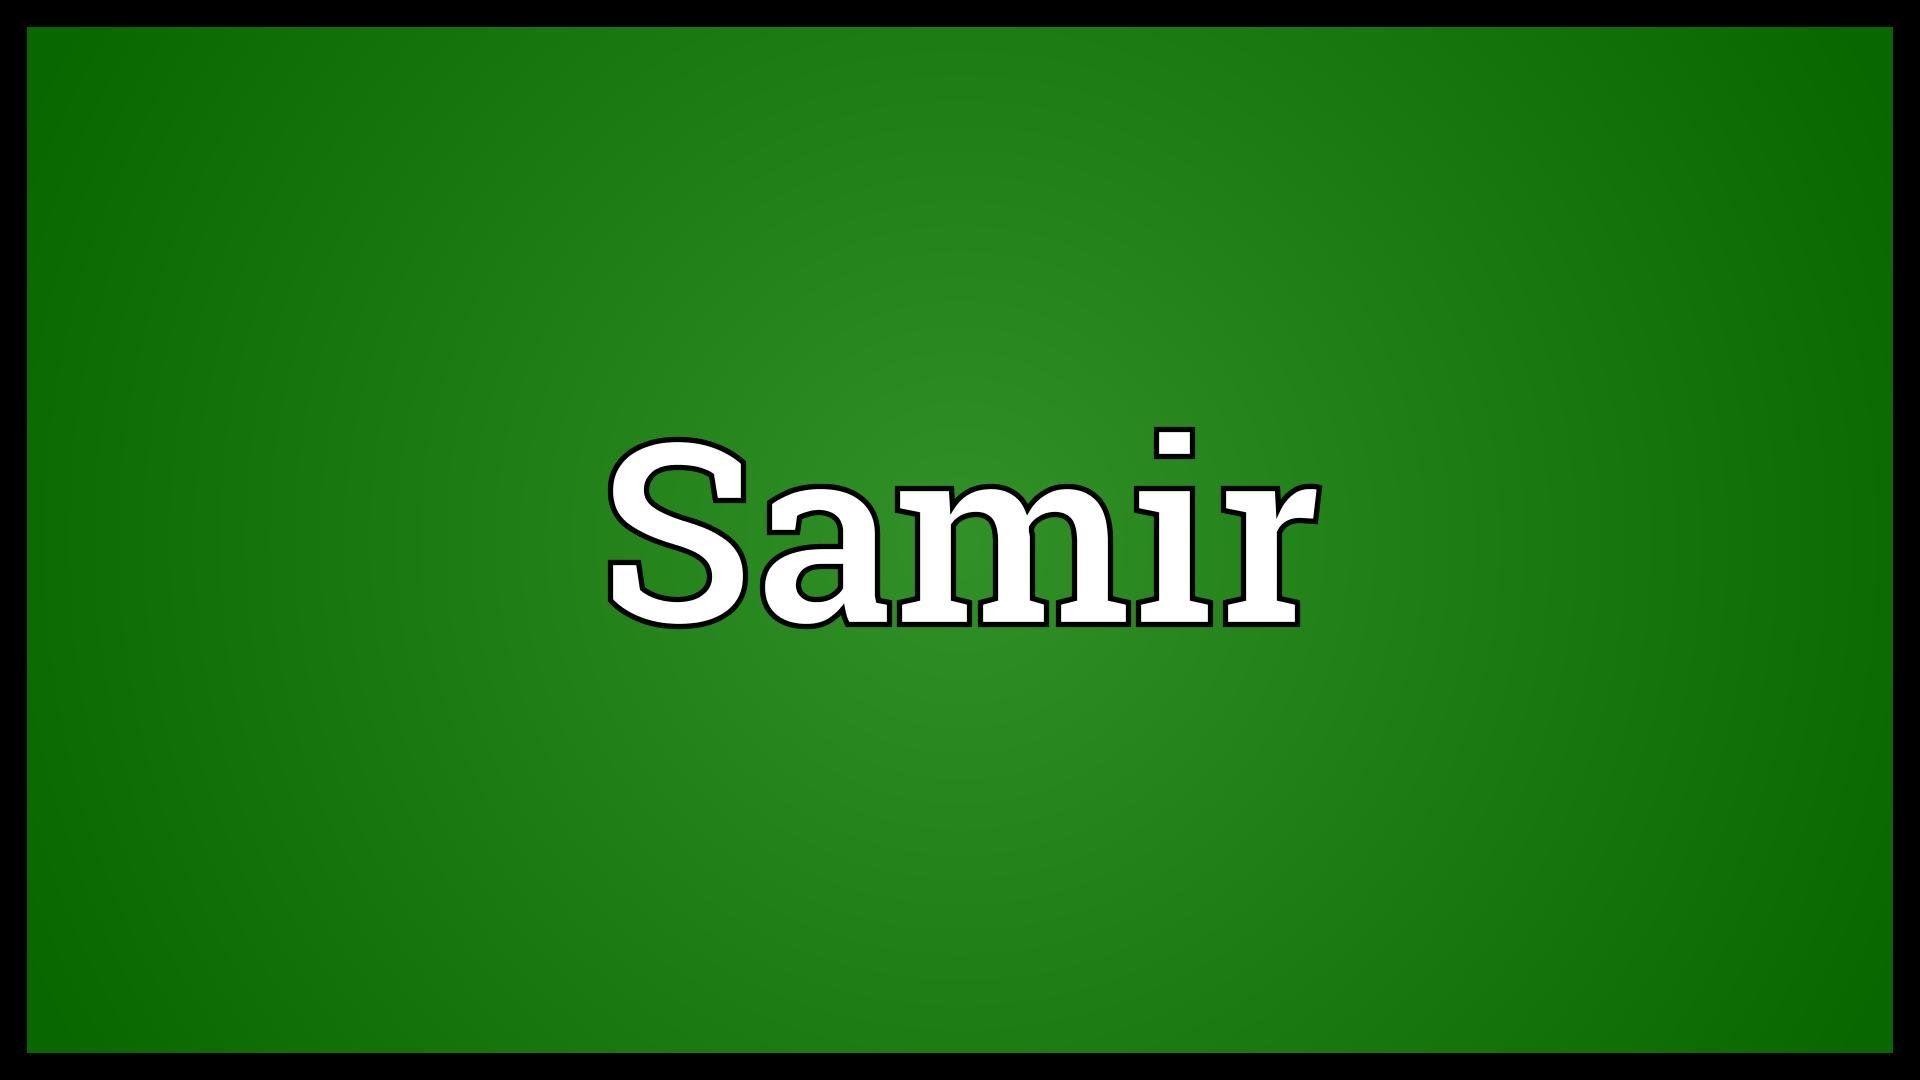 Samir Meaning